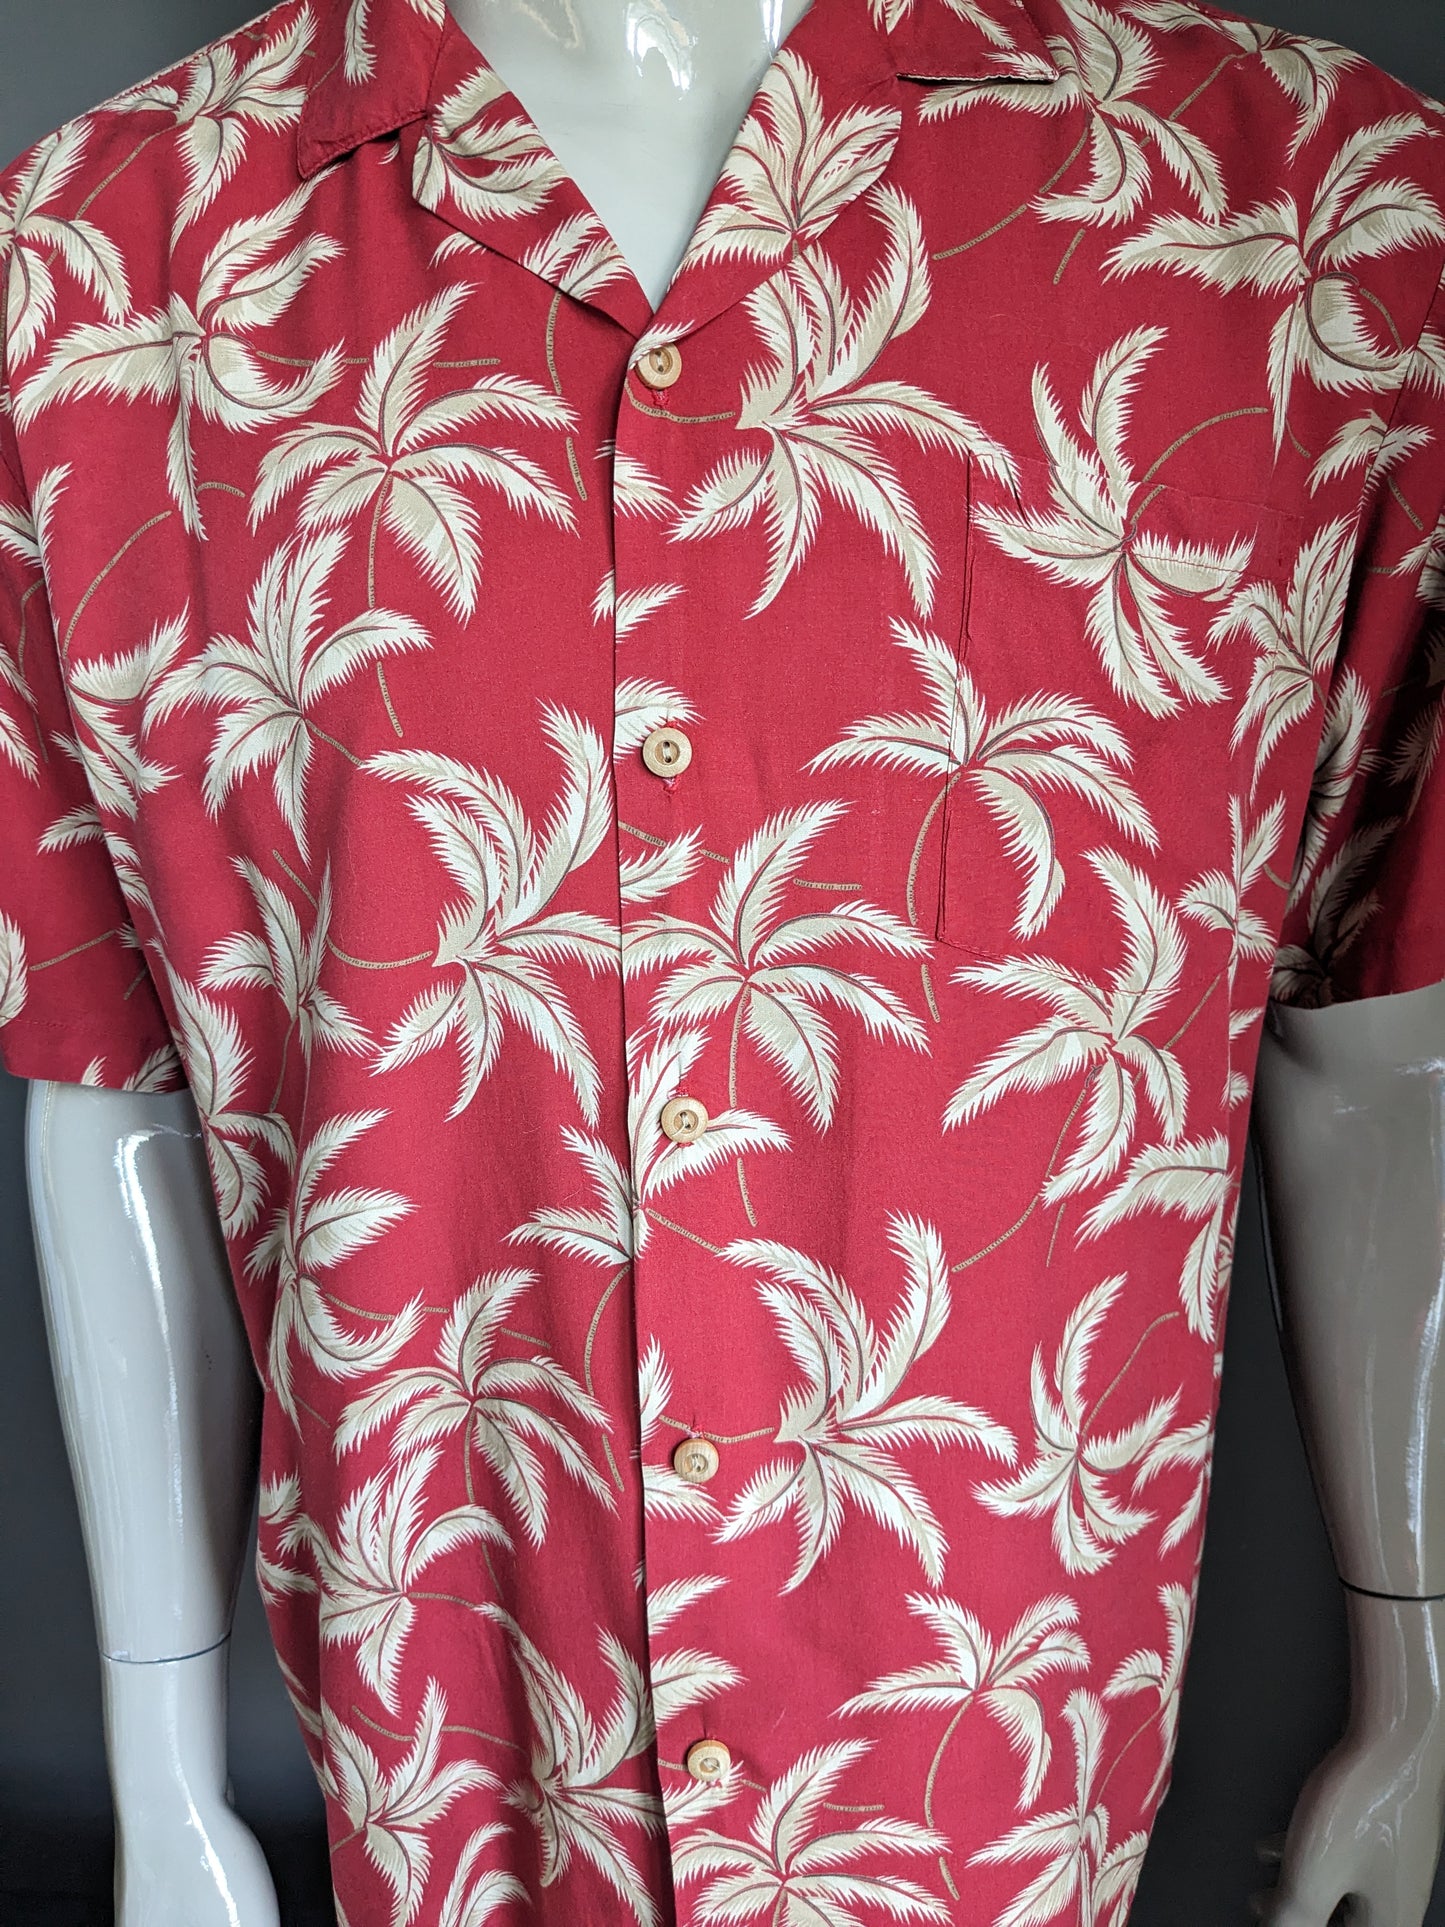 Paradise encontró la camisa de Hawai original manga corta. Impresión beige roja. Tamaño xxl / 2xl